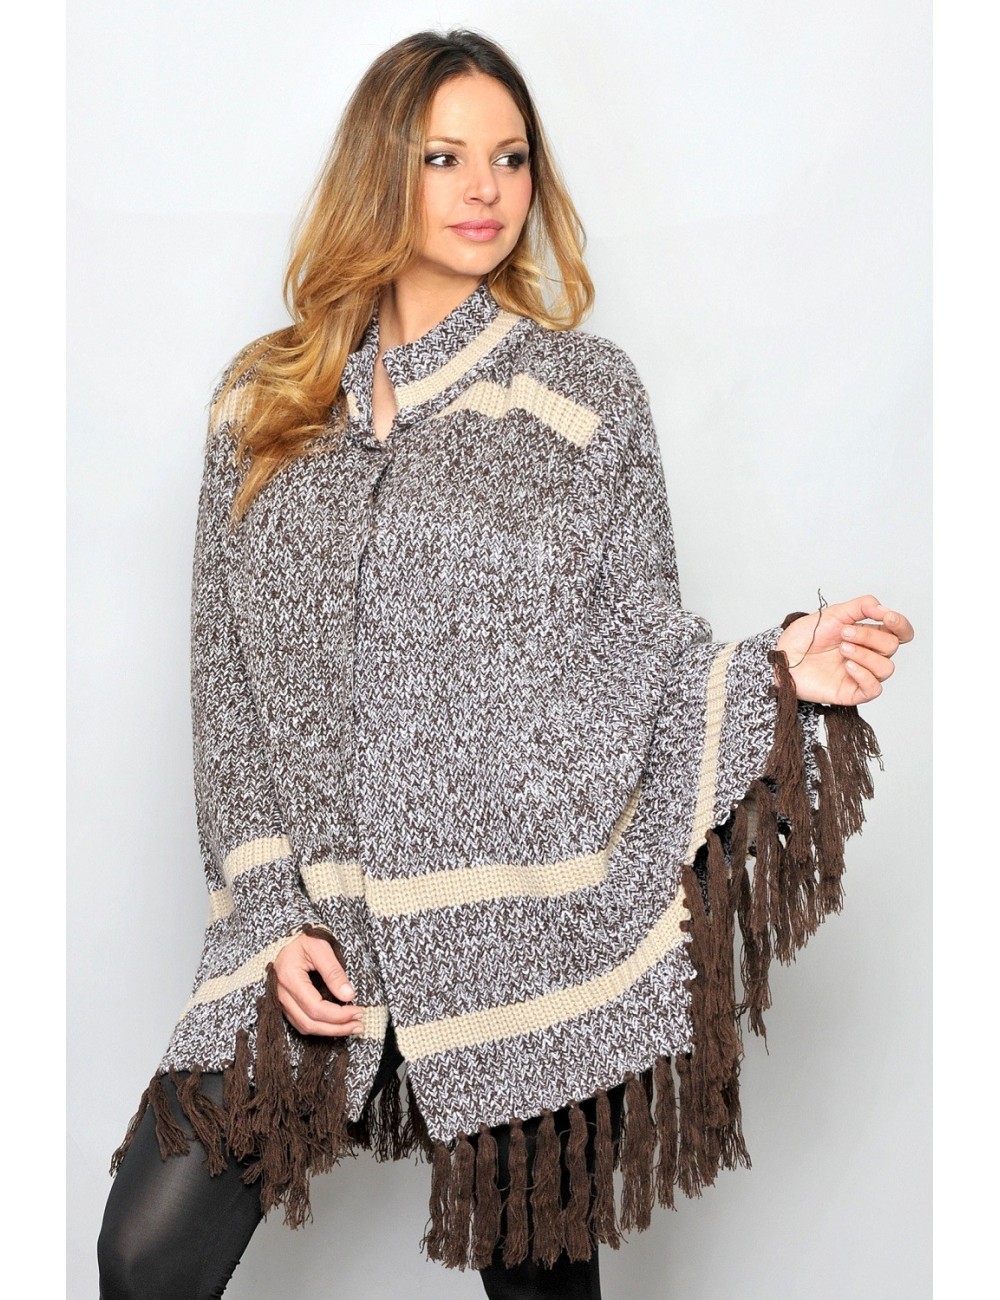 Poncho tricotat pentru femei maro-bej